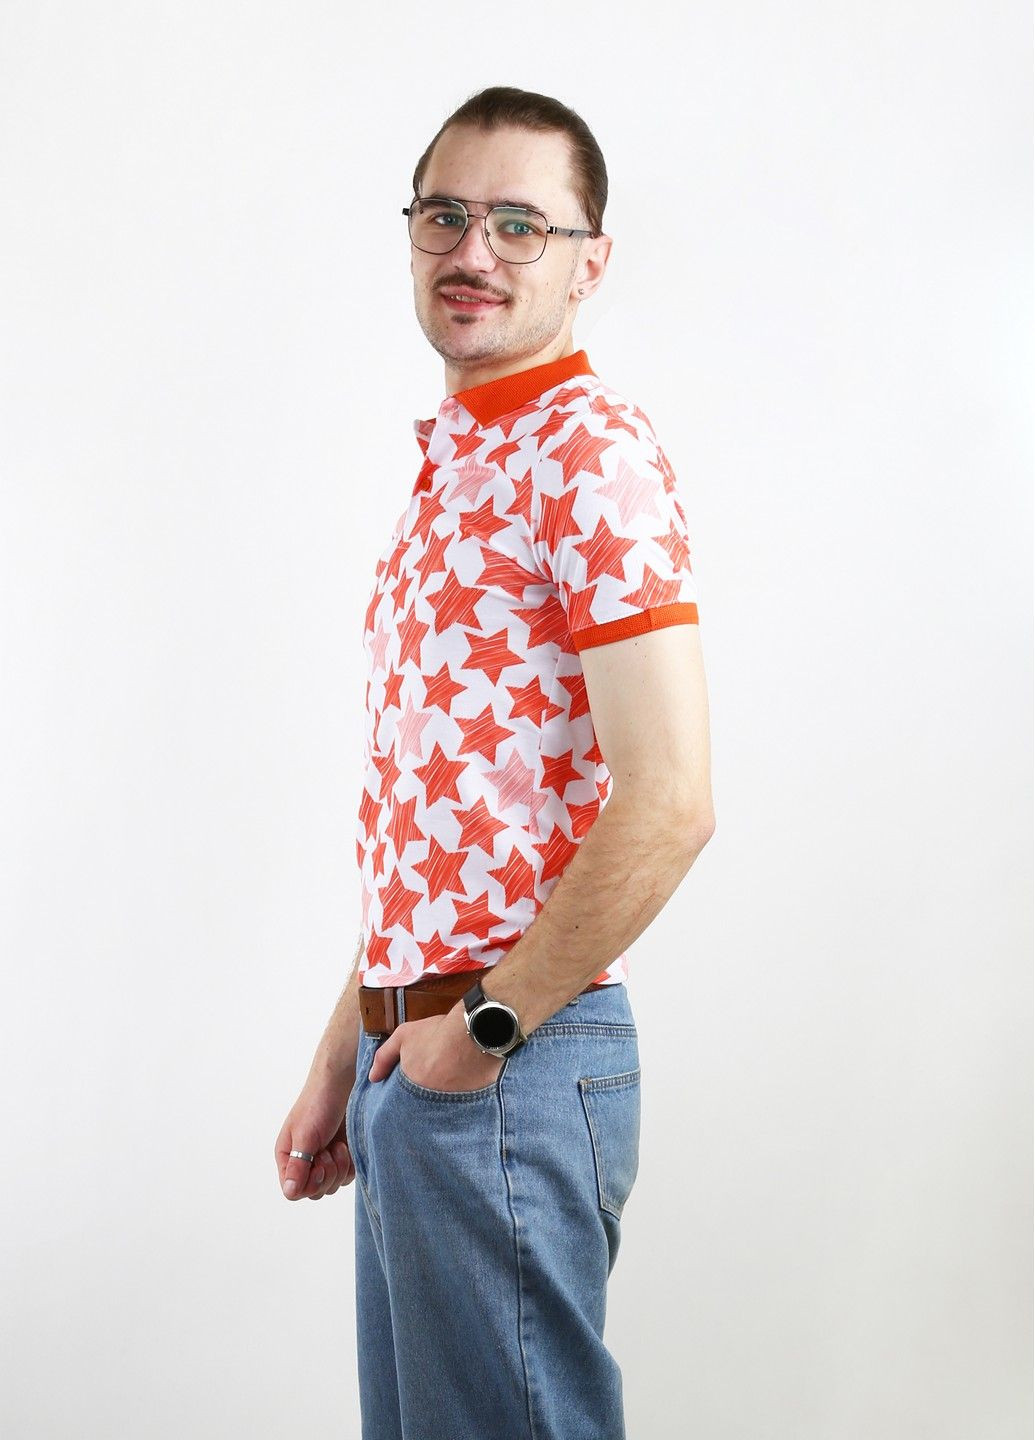 Оранжевая футболка-поло для мужчин Mtp звезды